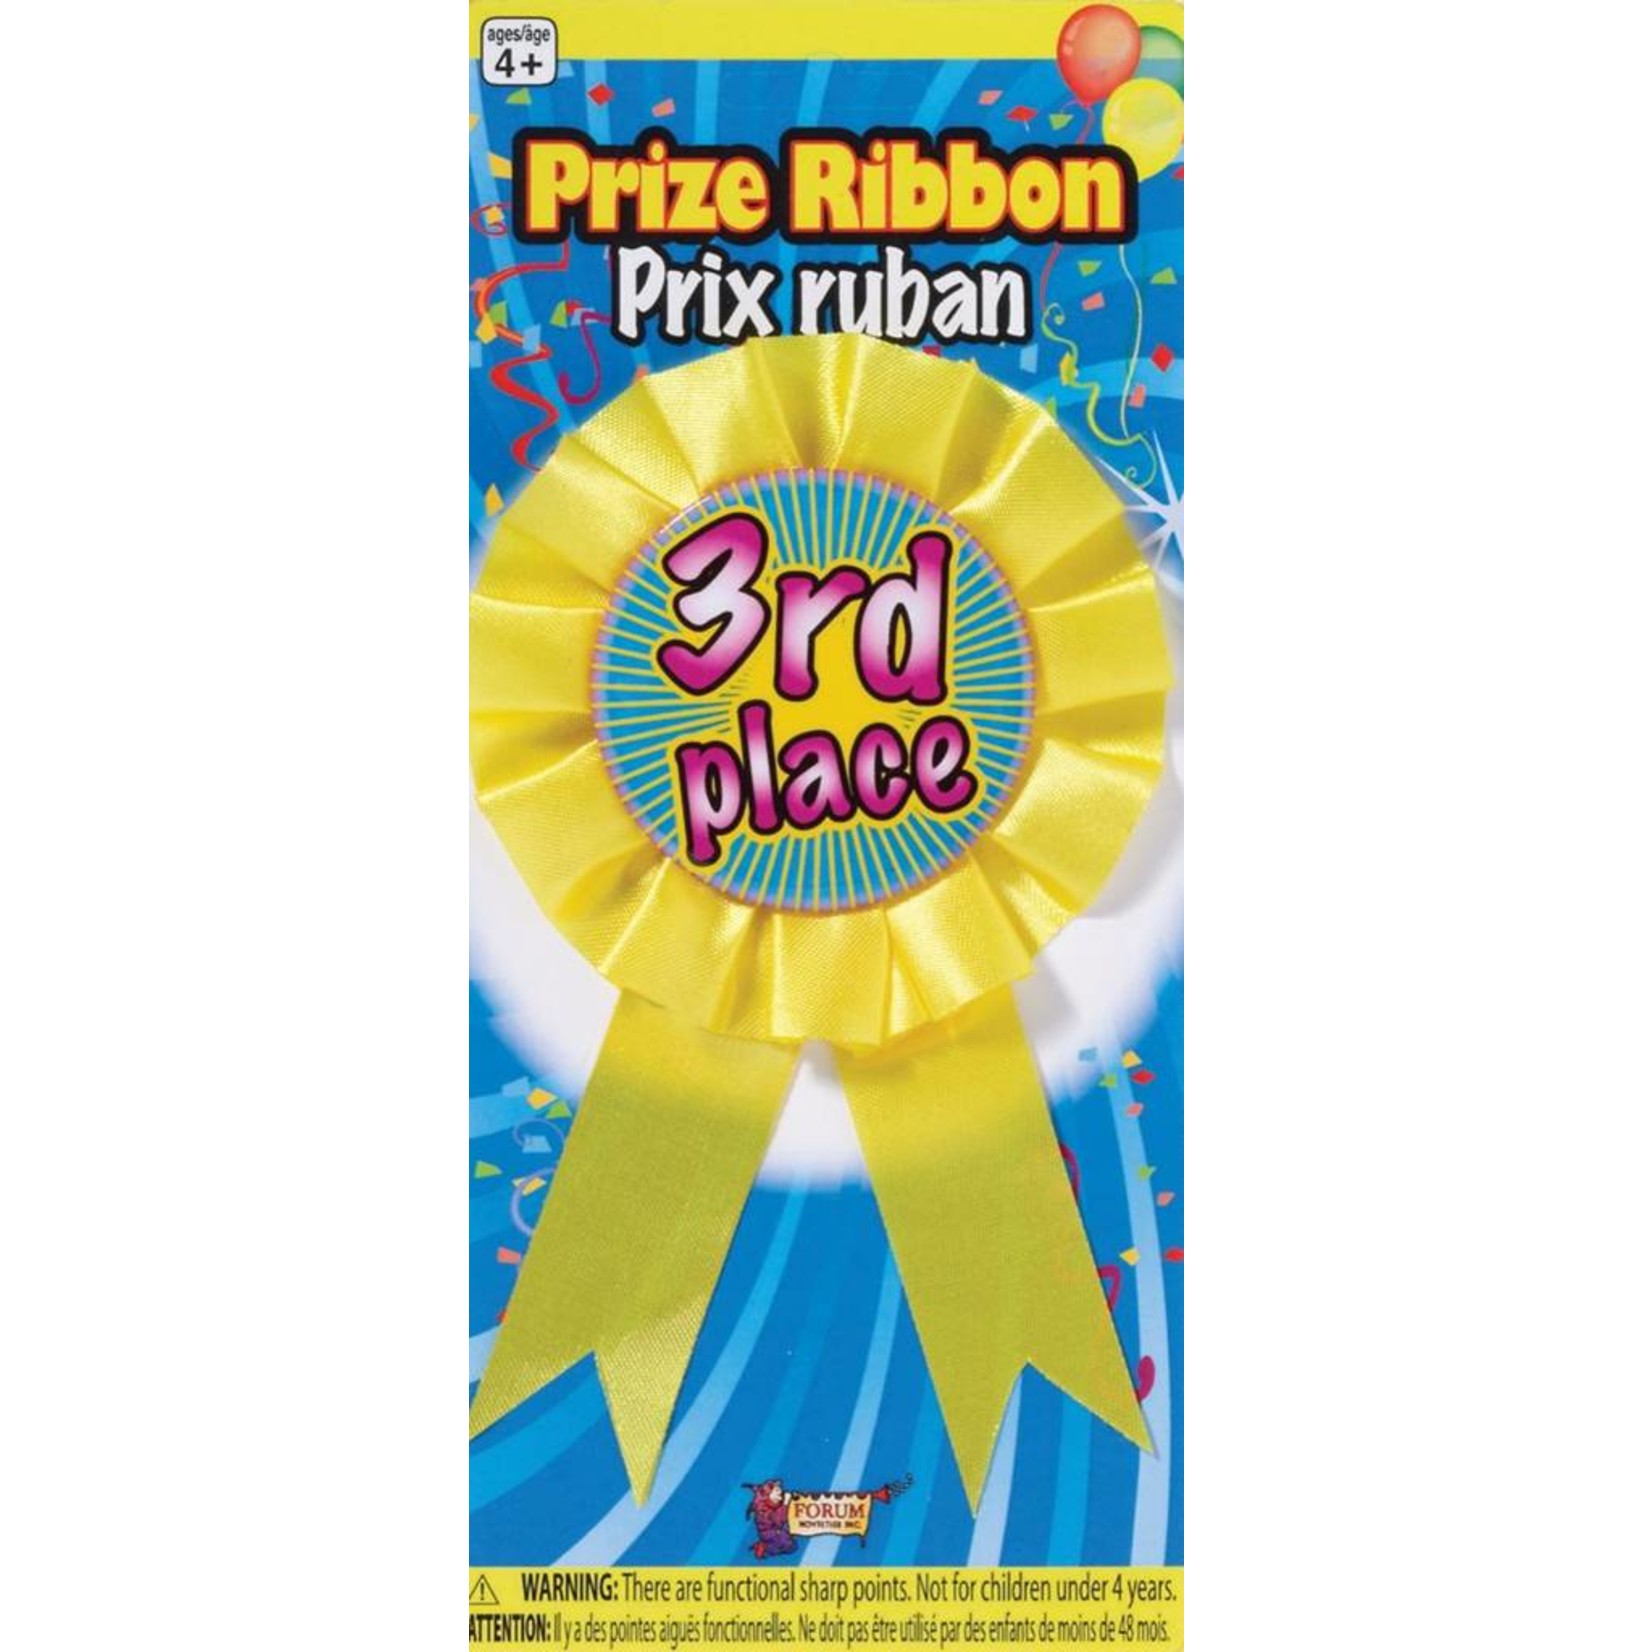 3rd Place Ribbon